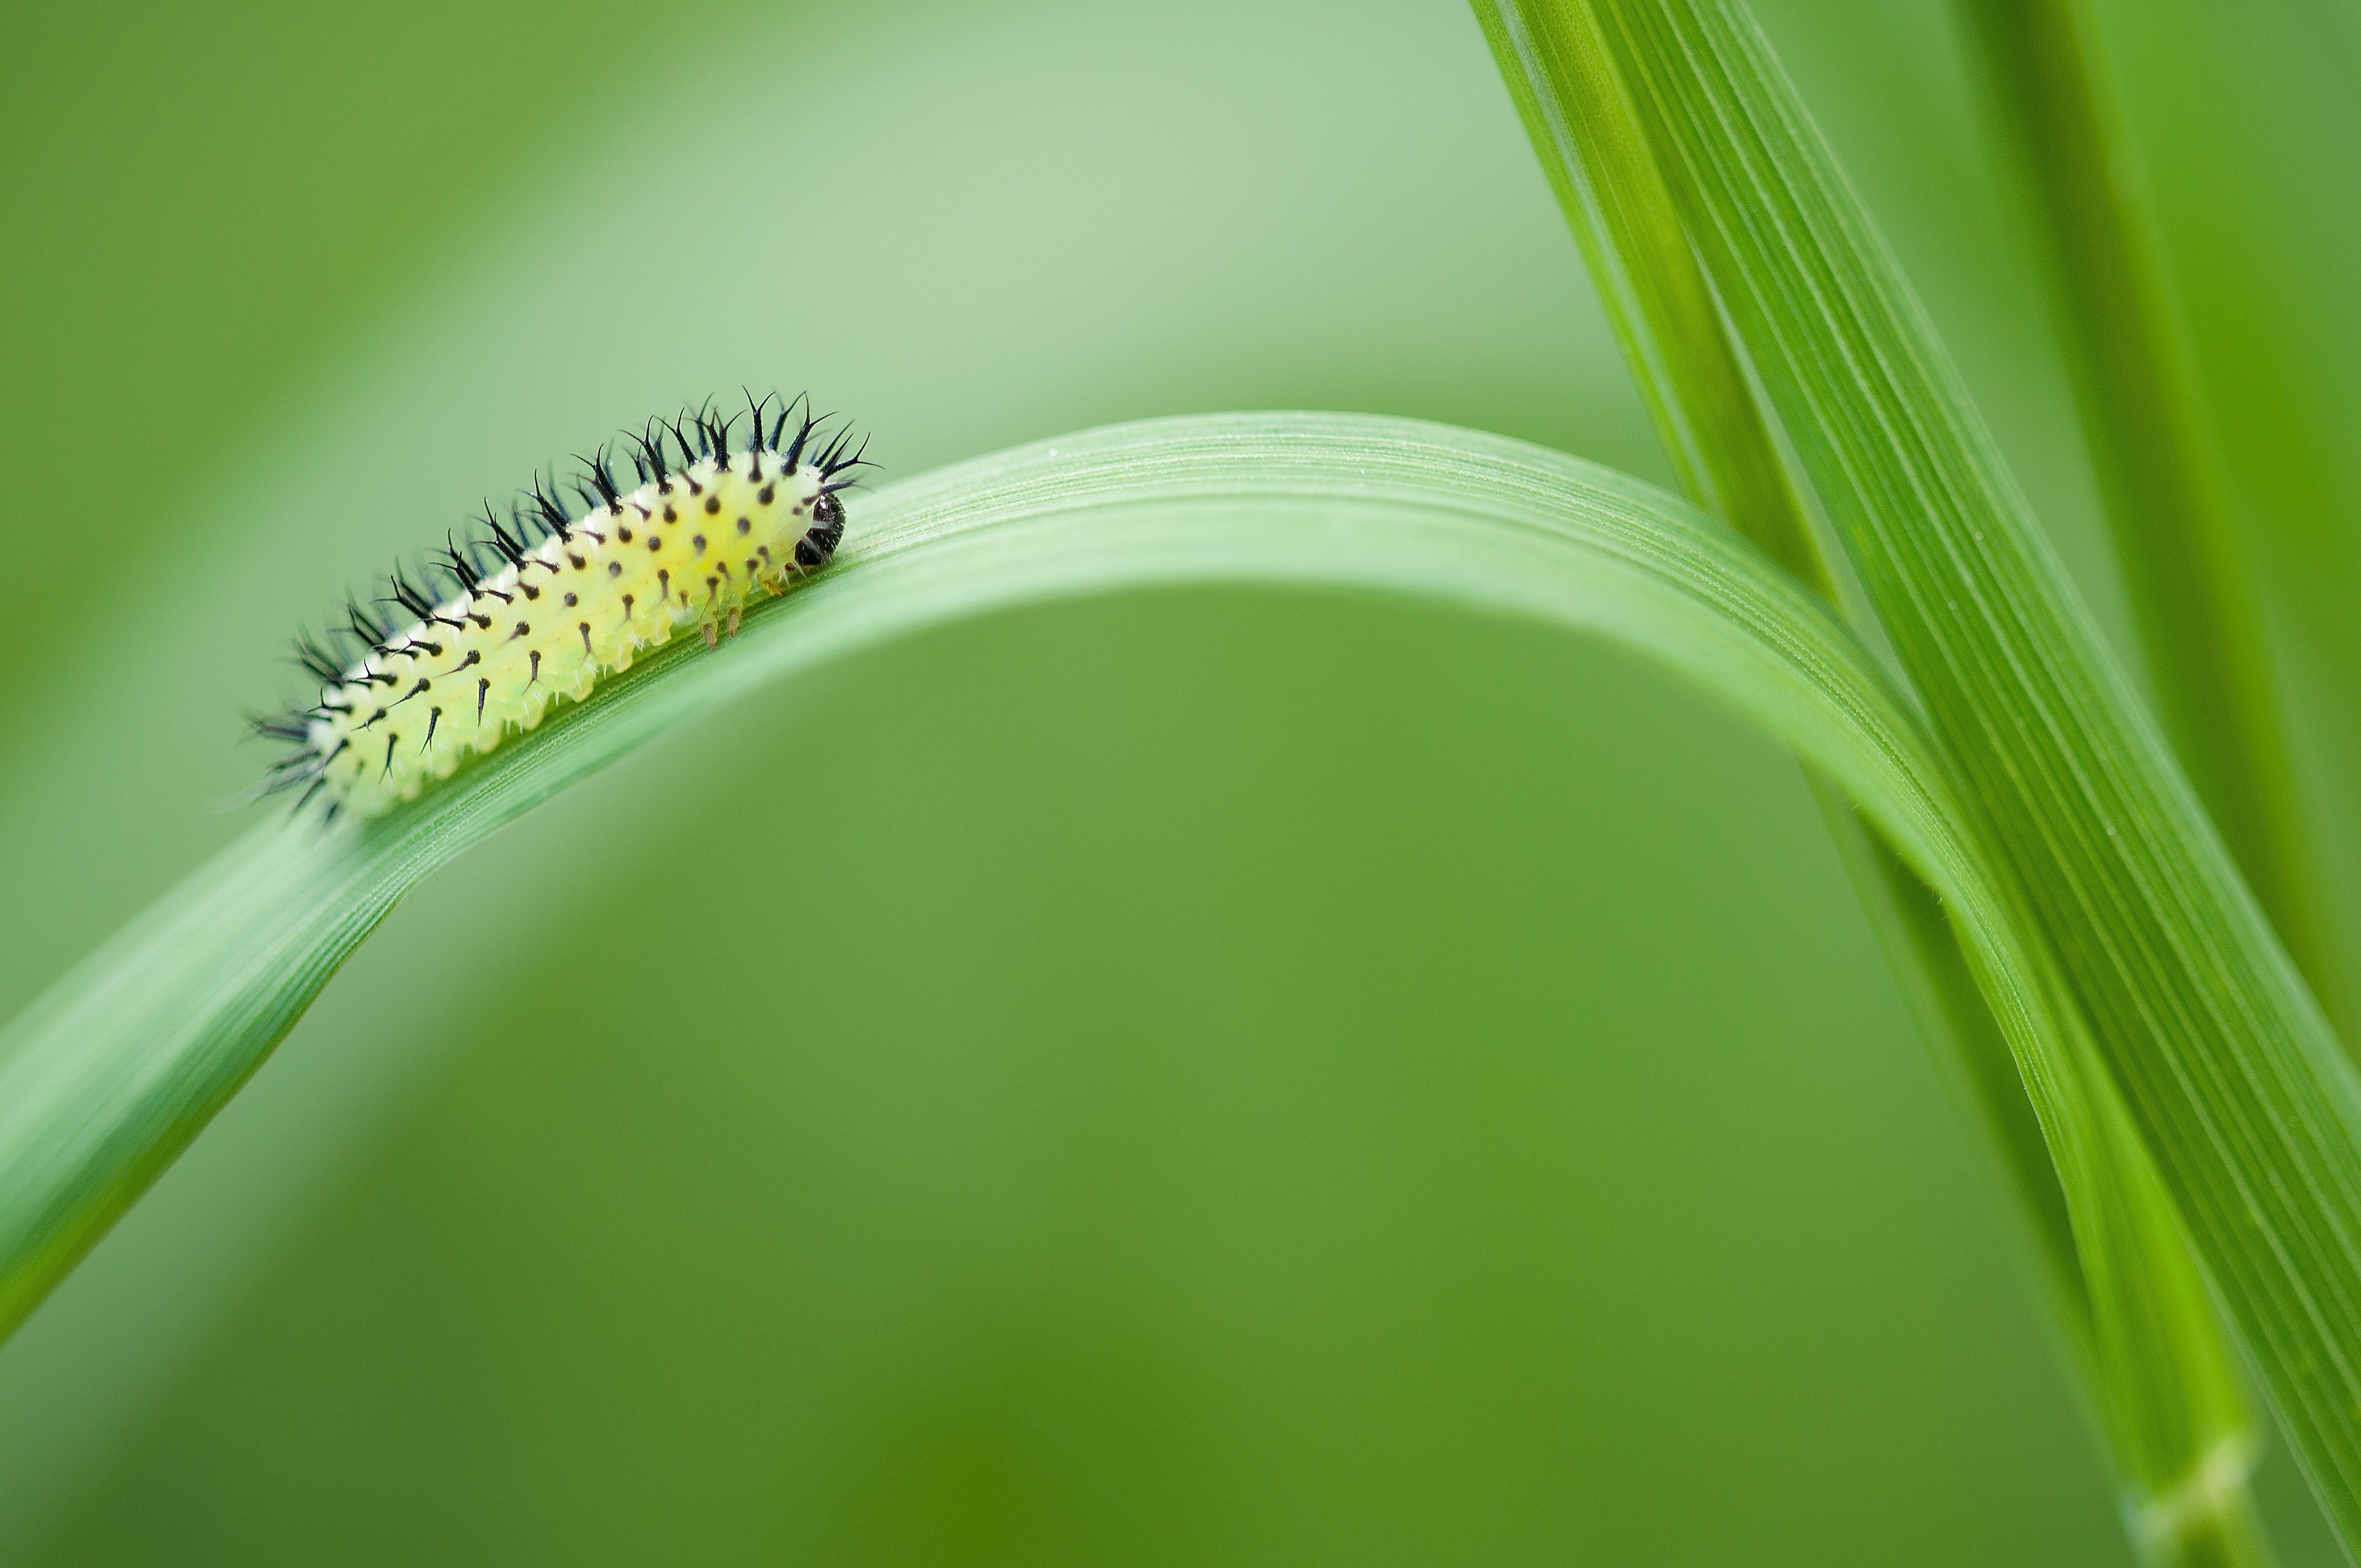 Yellow Black Catterpillar on Grass Leave, Animal, Caterpillar, Close-up, Green, HQ Photo